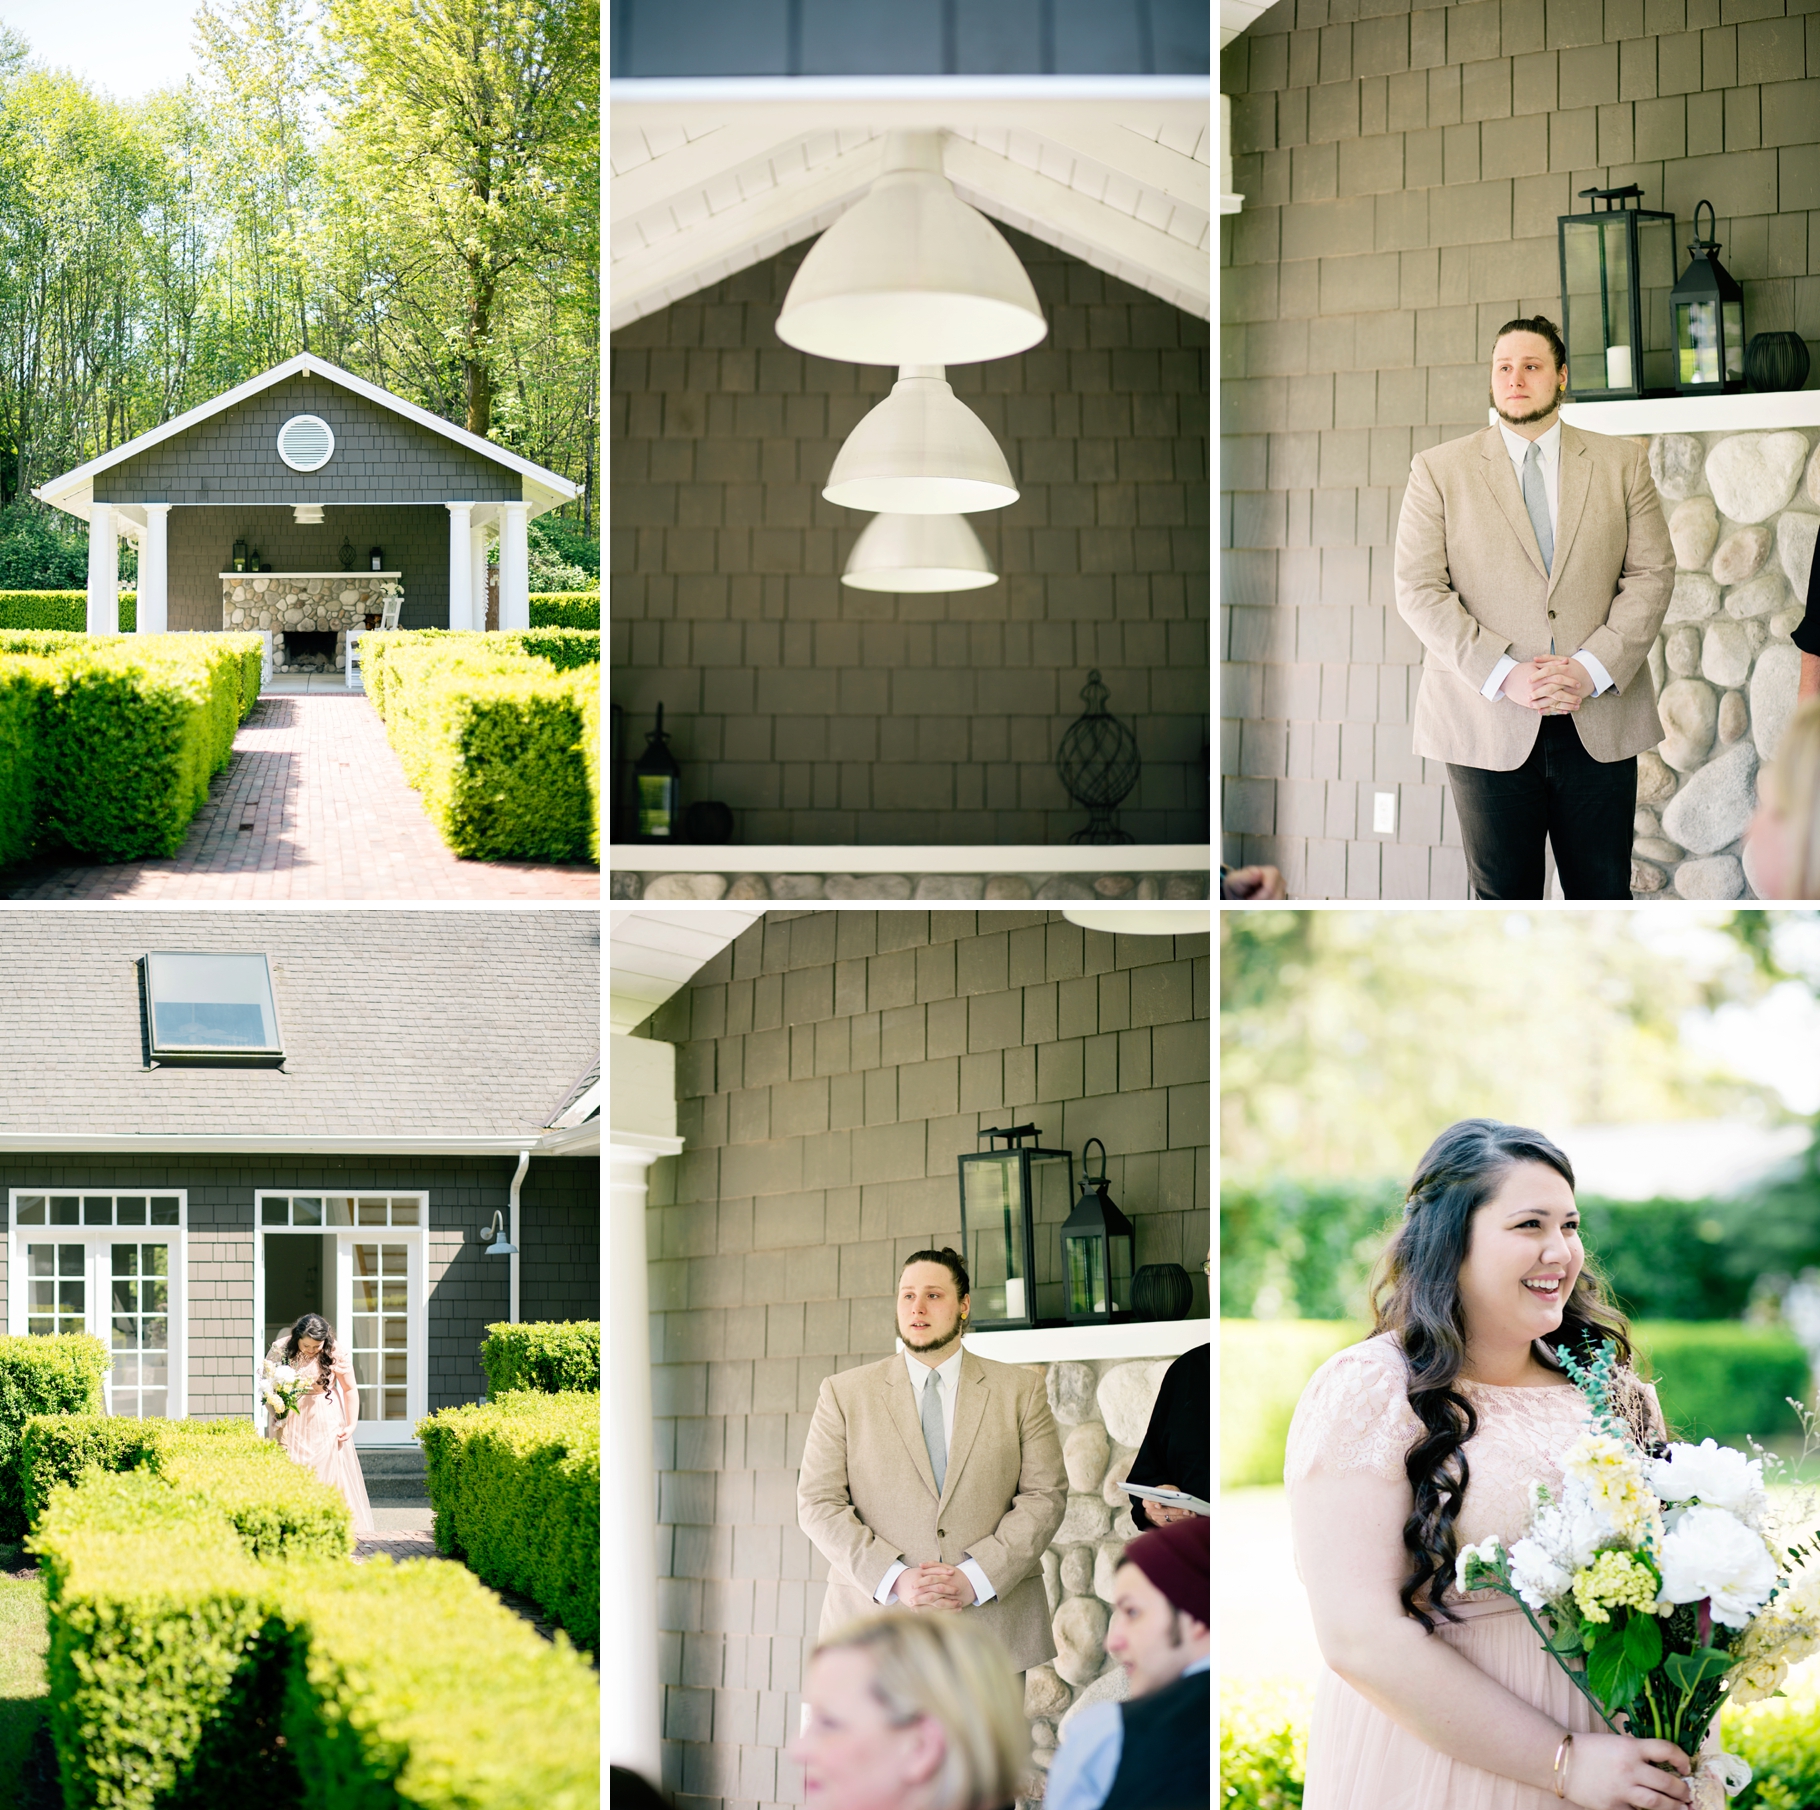 7-Backyard-Elopement-Woodinville-Seattle-Garden-Ceremony-Groom-Bride-Aisle-Photographer-Wedding-Photography-by-Betty-Elaine